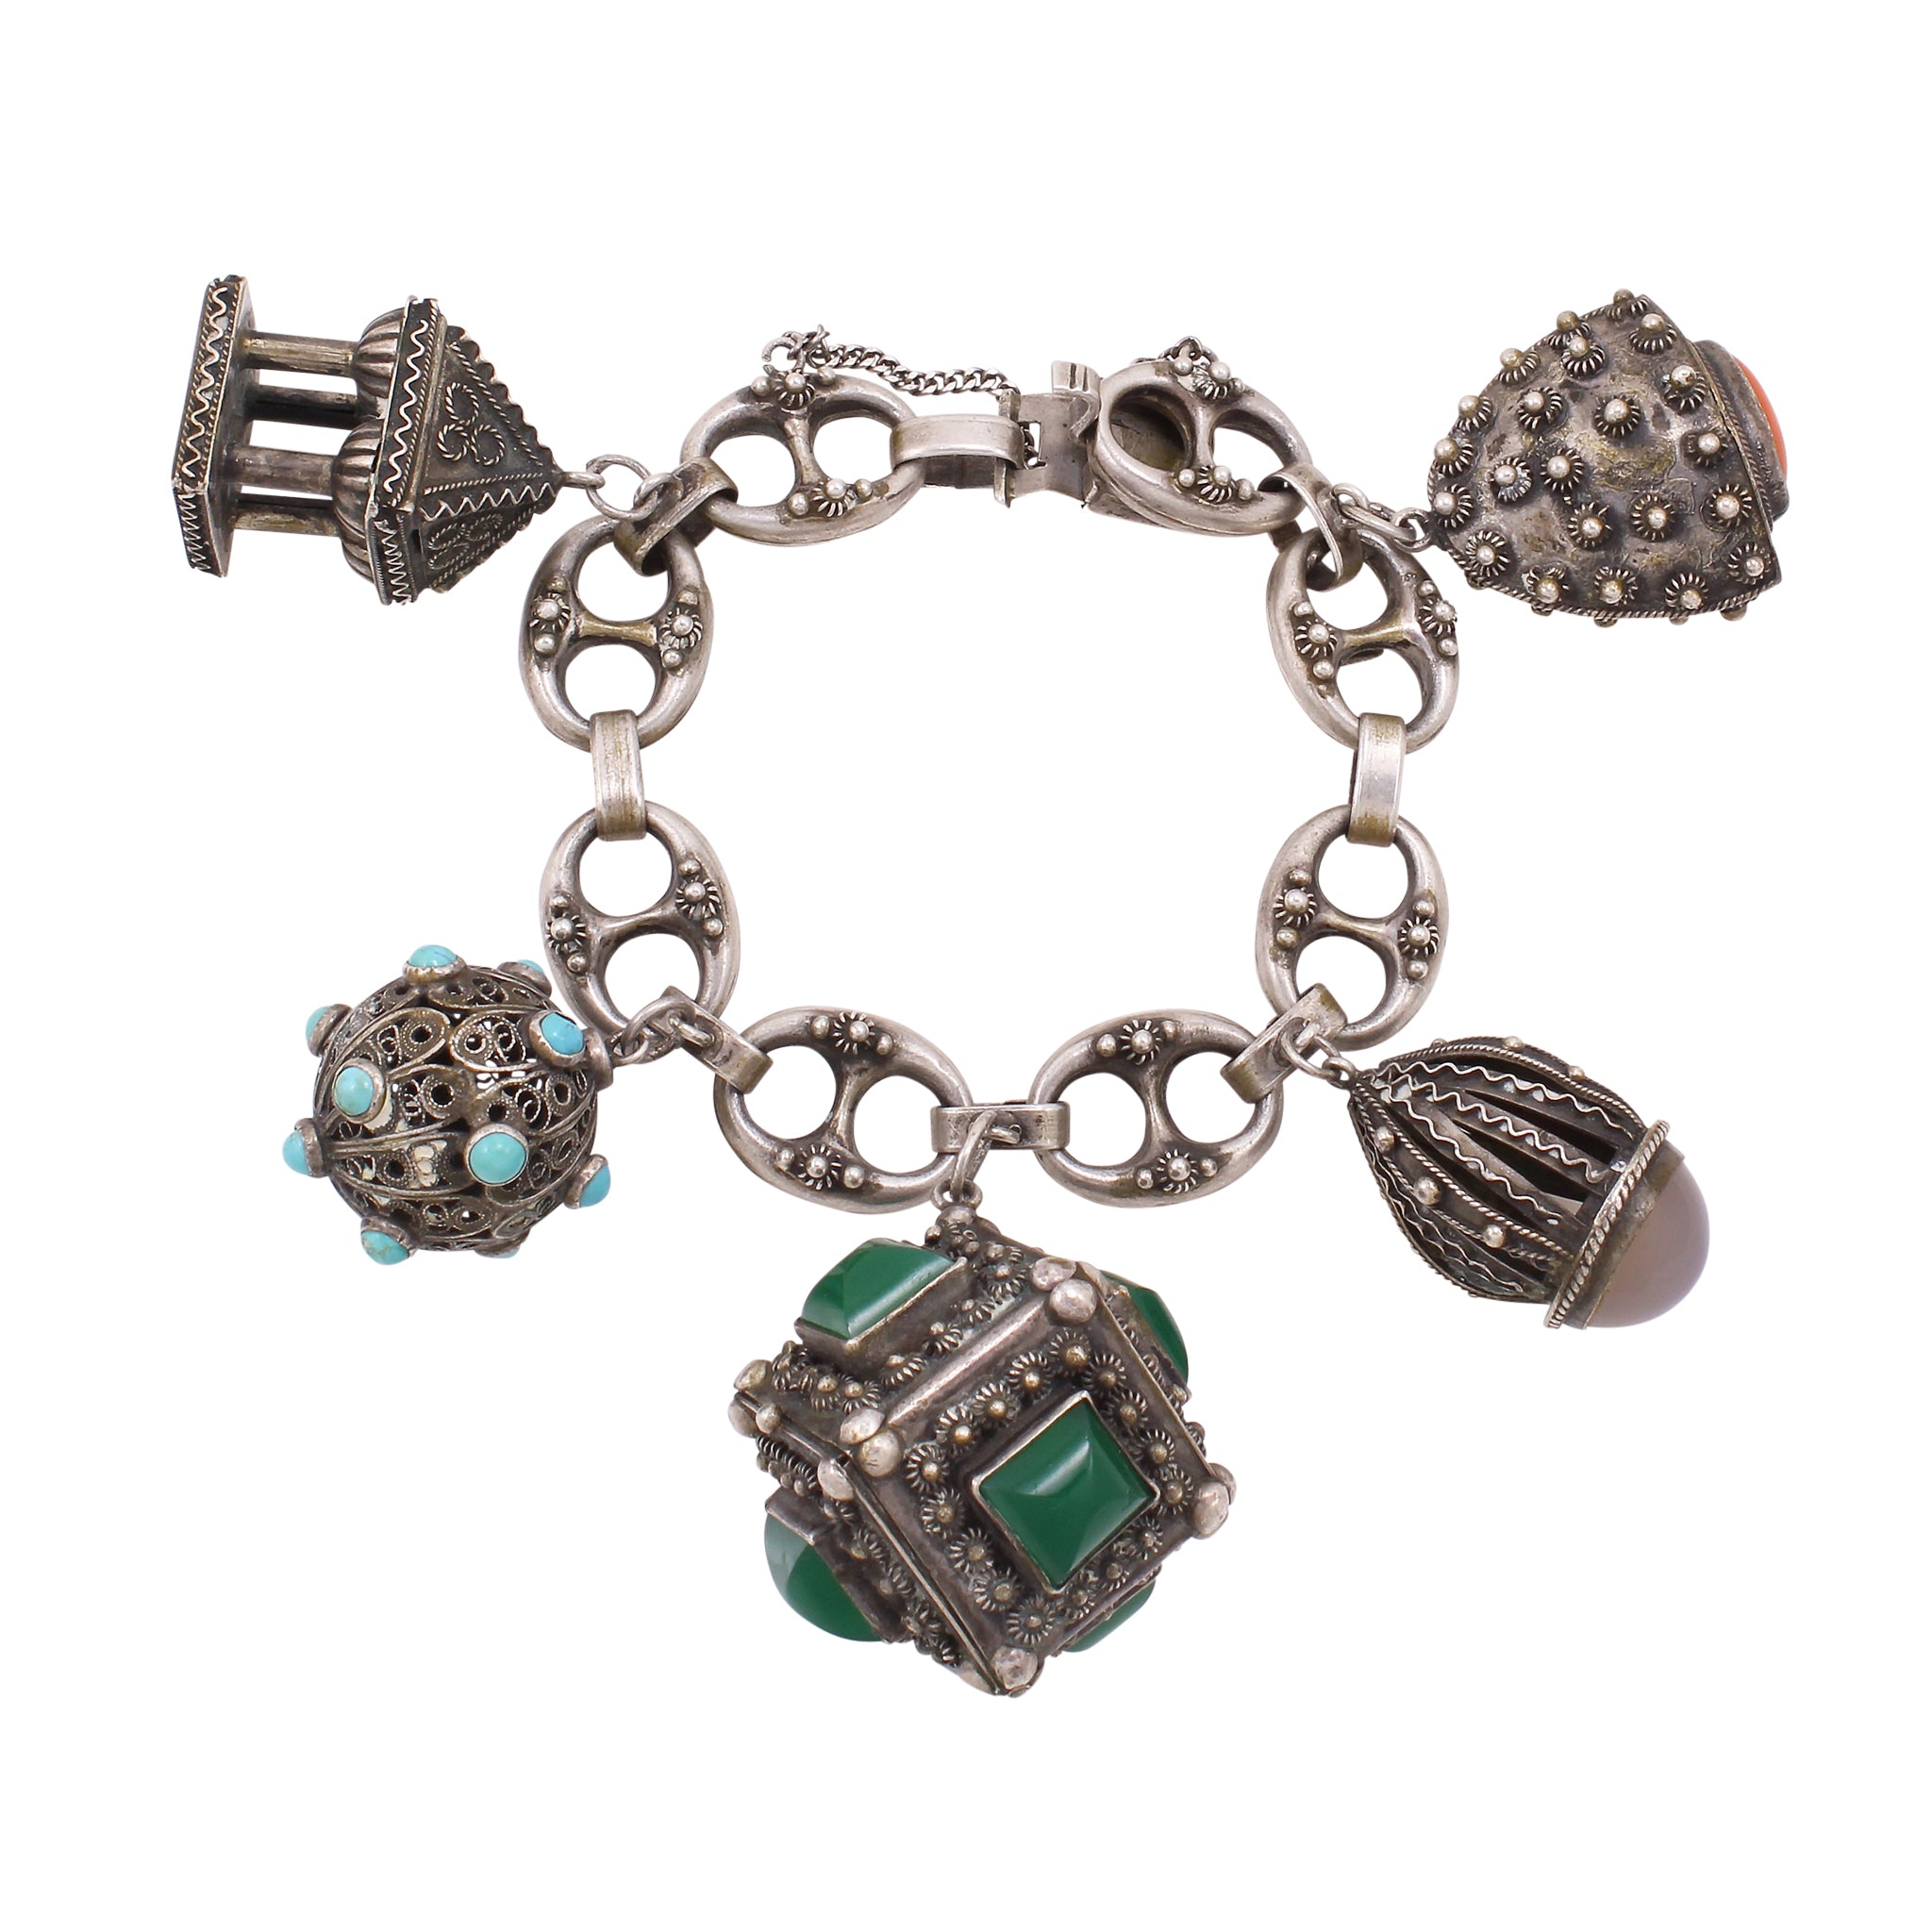 Franconeri Italian Silver Etrusan Style Charm Bracelet with Perfume Front